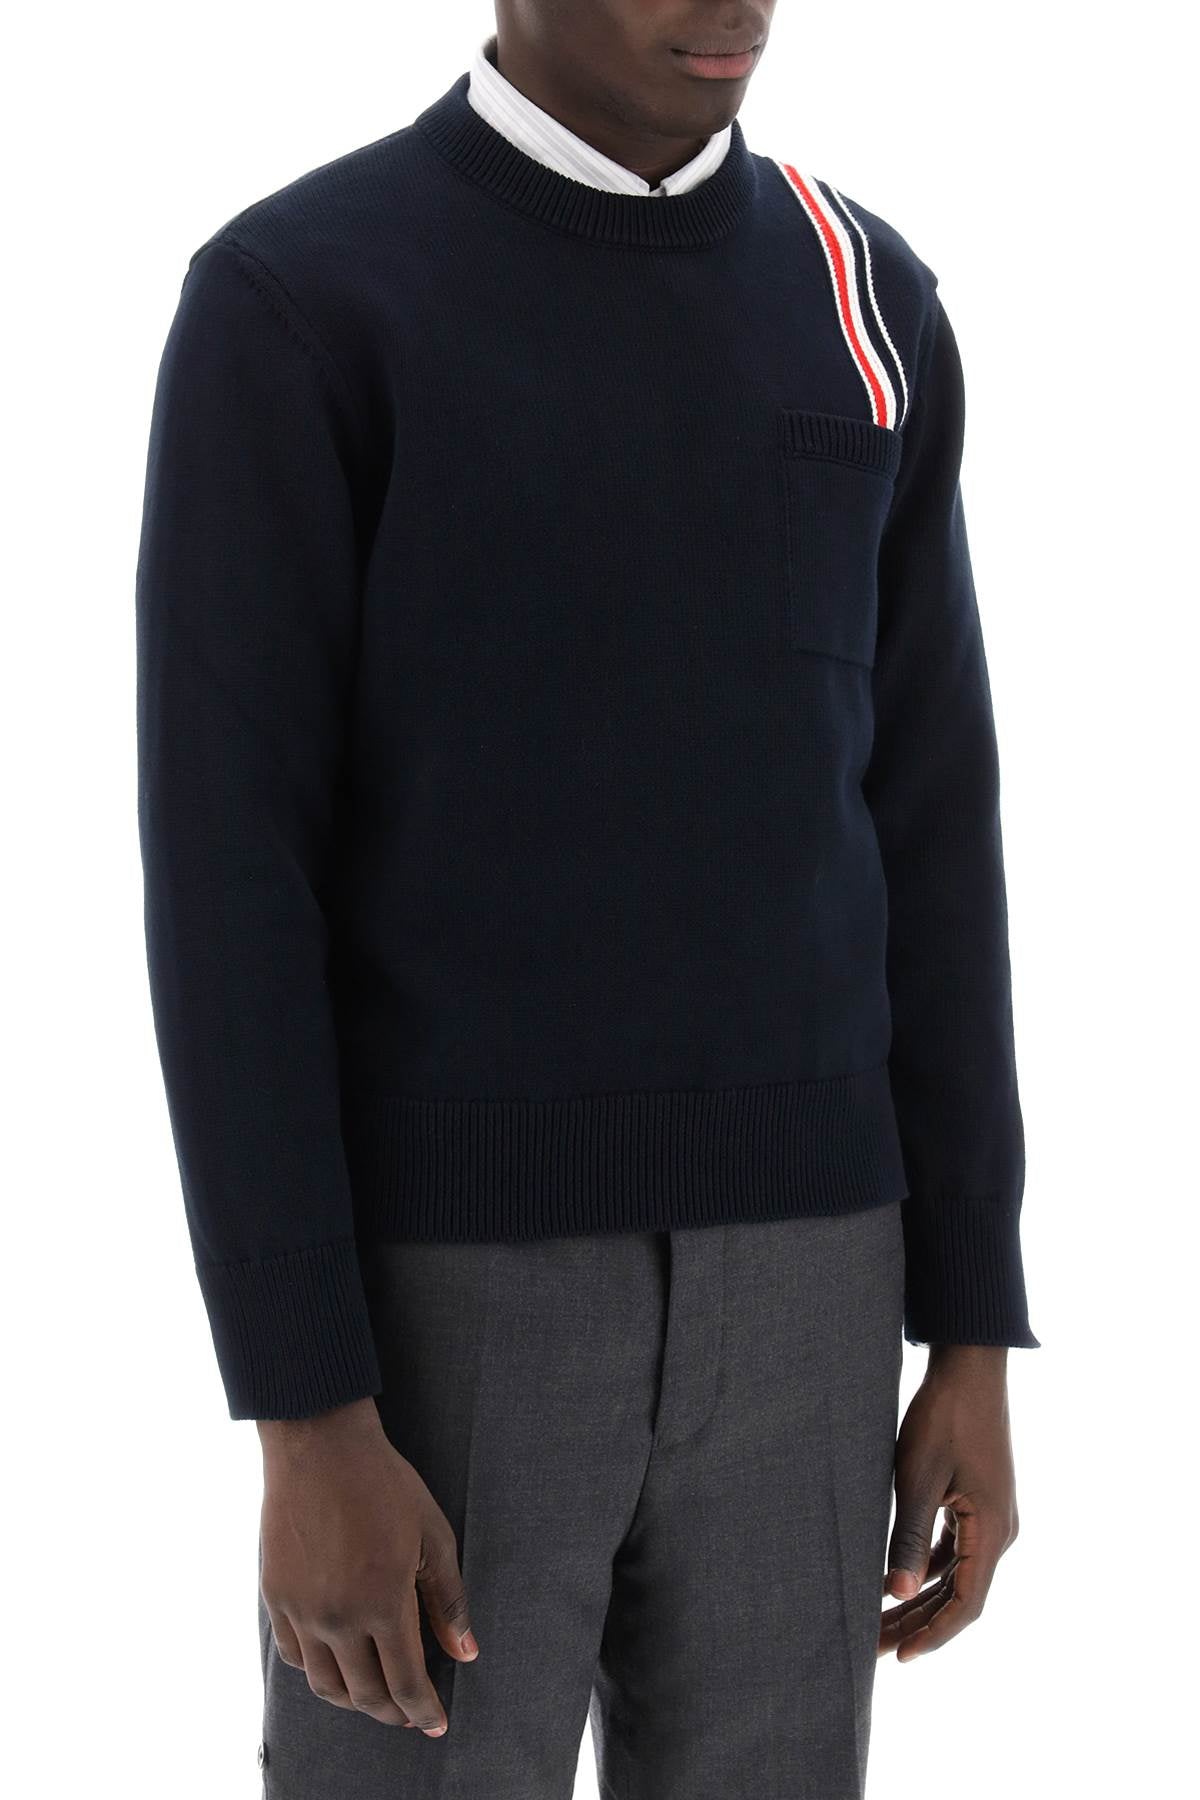 Thom browne cotton pullover with rwb stripe-1